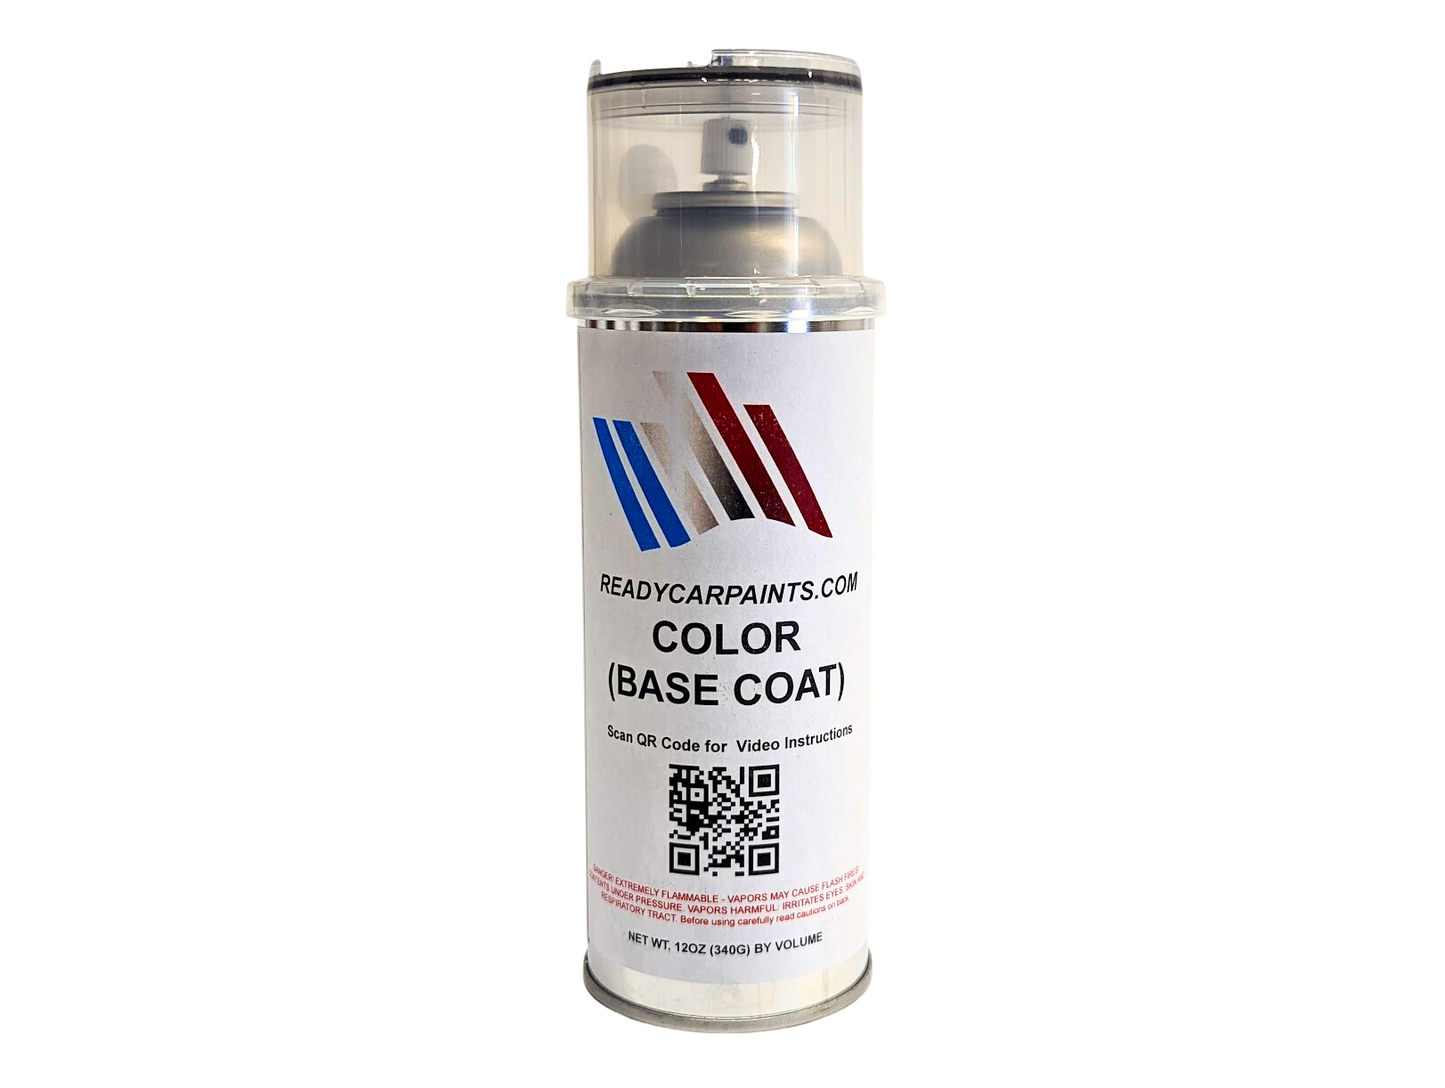 SCION 9AF Elusive Blue Metallic Automotive Spray Paint 100% OEM Color Match